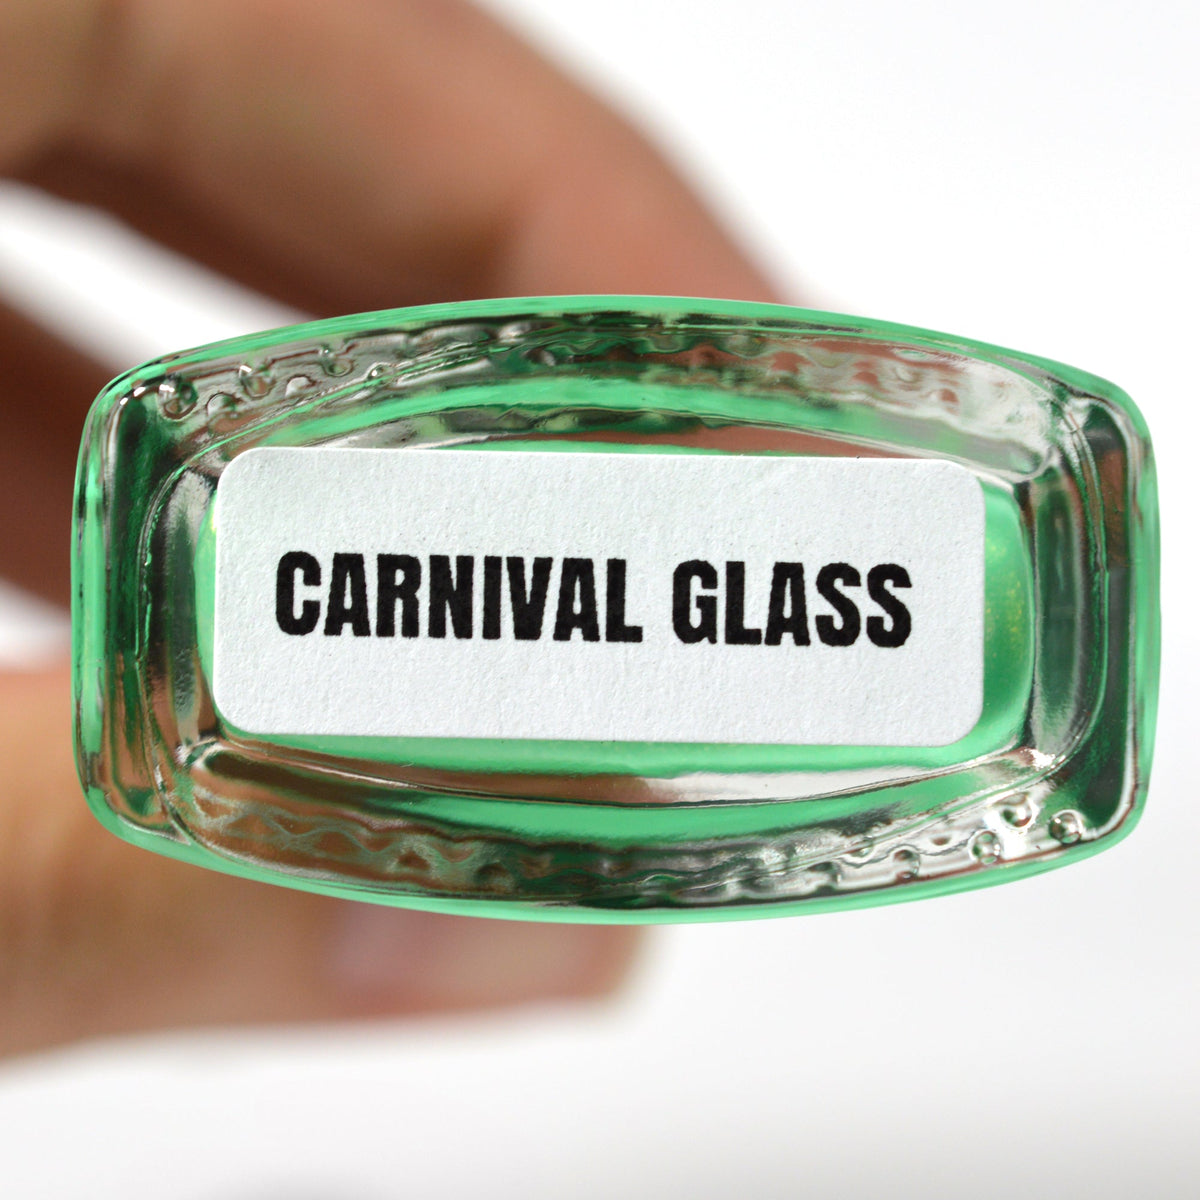 Carnival Glass - Nail Polish - BLUSH